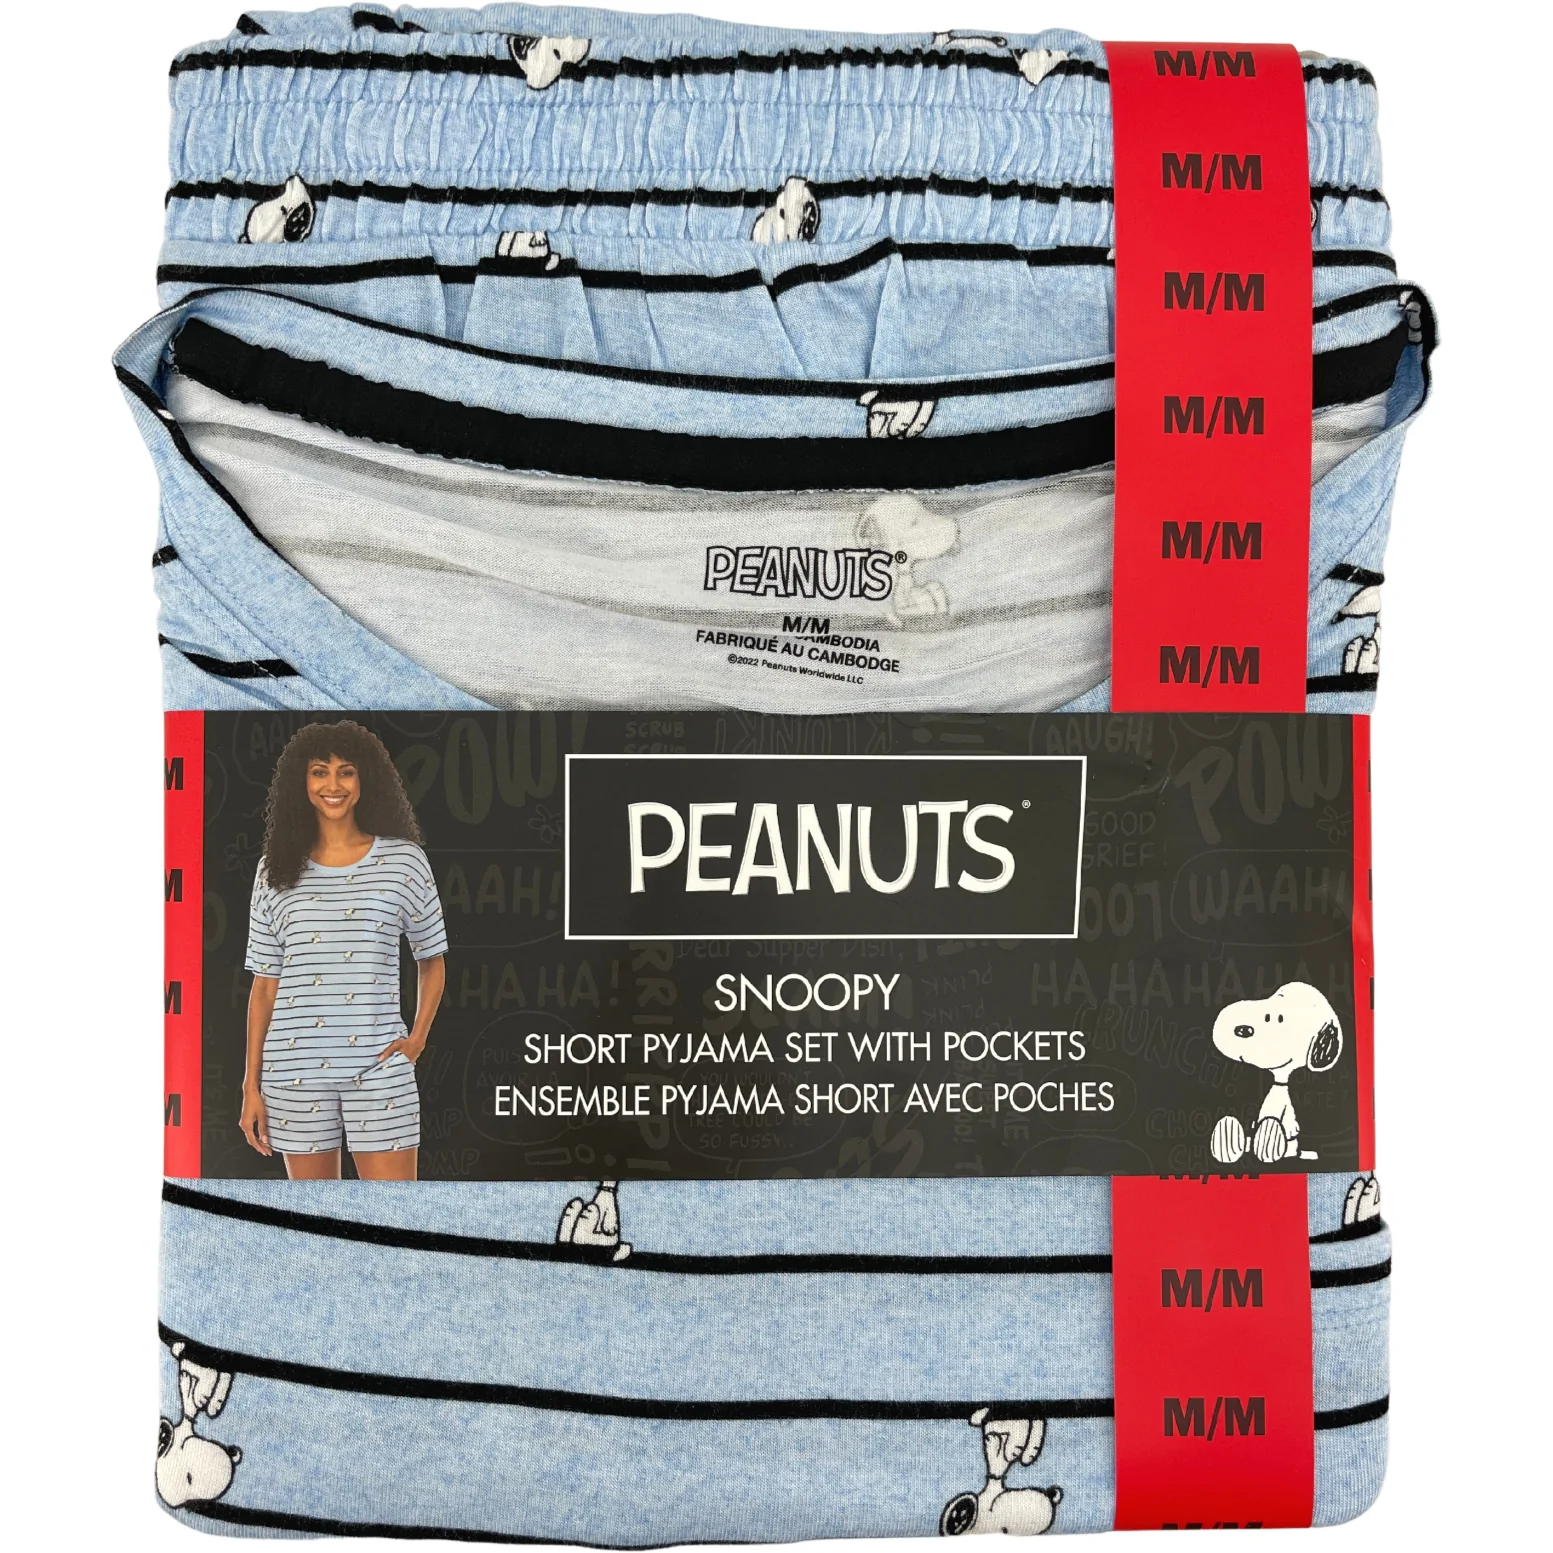 Peanuts Women's Pyjama Set / 2 Piece Set / Snoopy Theme / Blue & Black / Size Medium